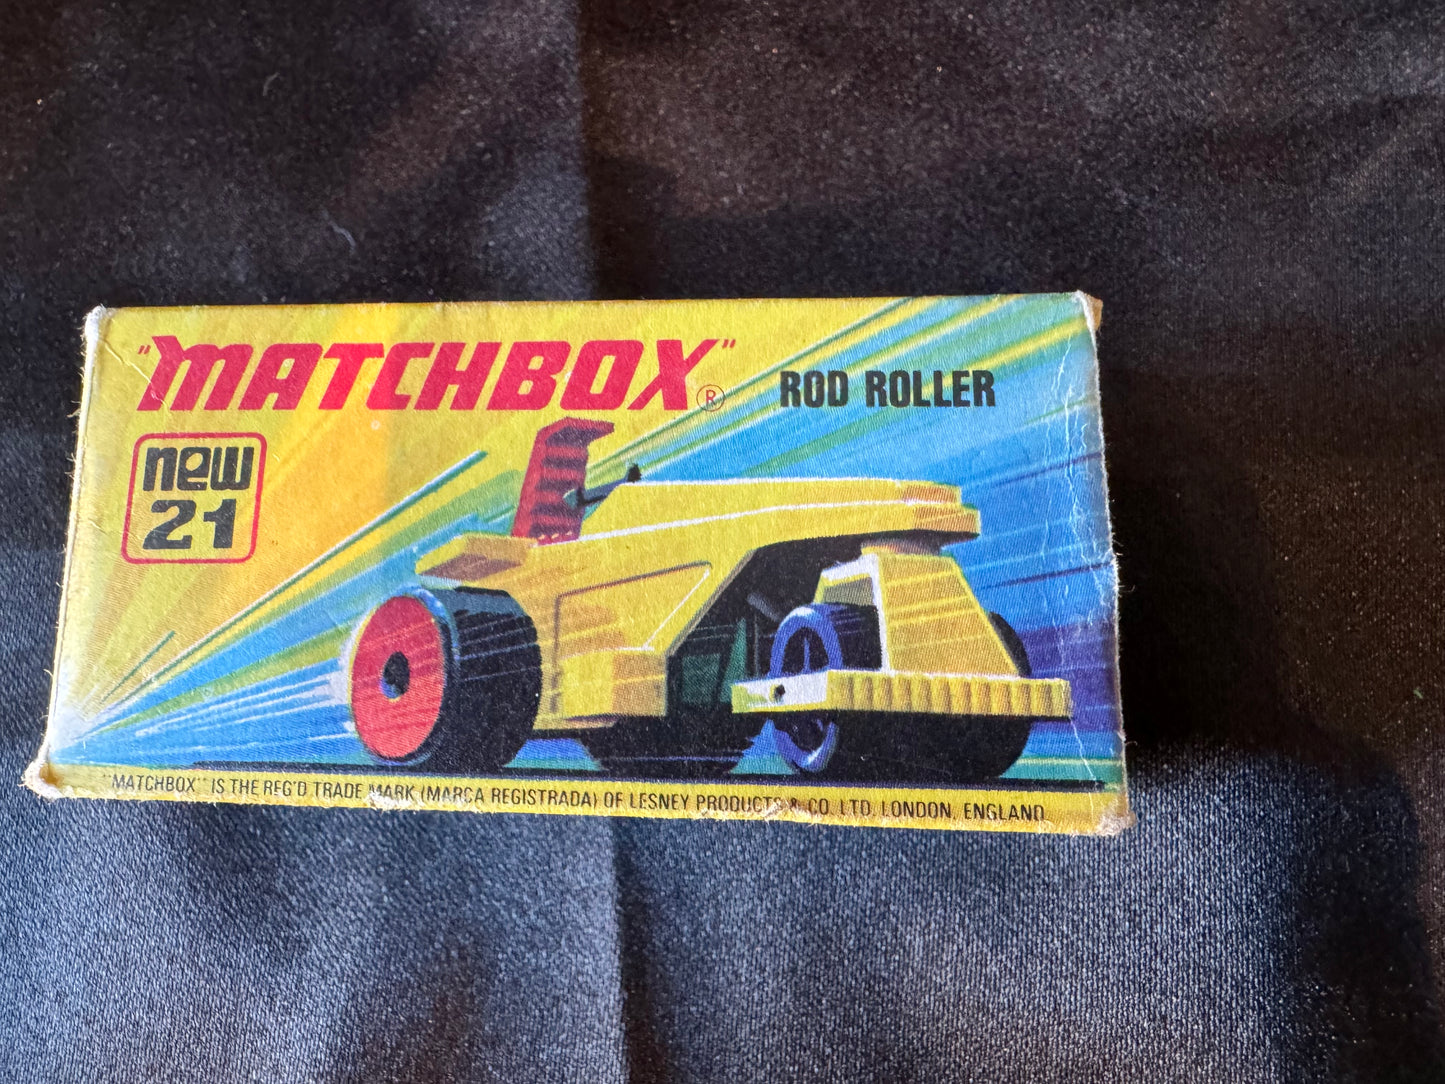 Vintage MATCHBOX #21 Rod Roller 1972, MINT condition, great find!